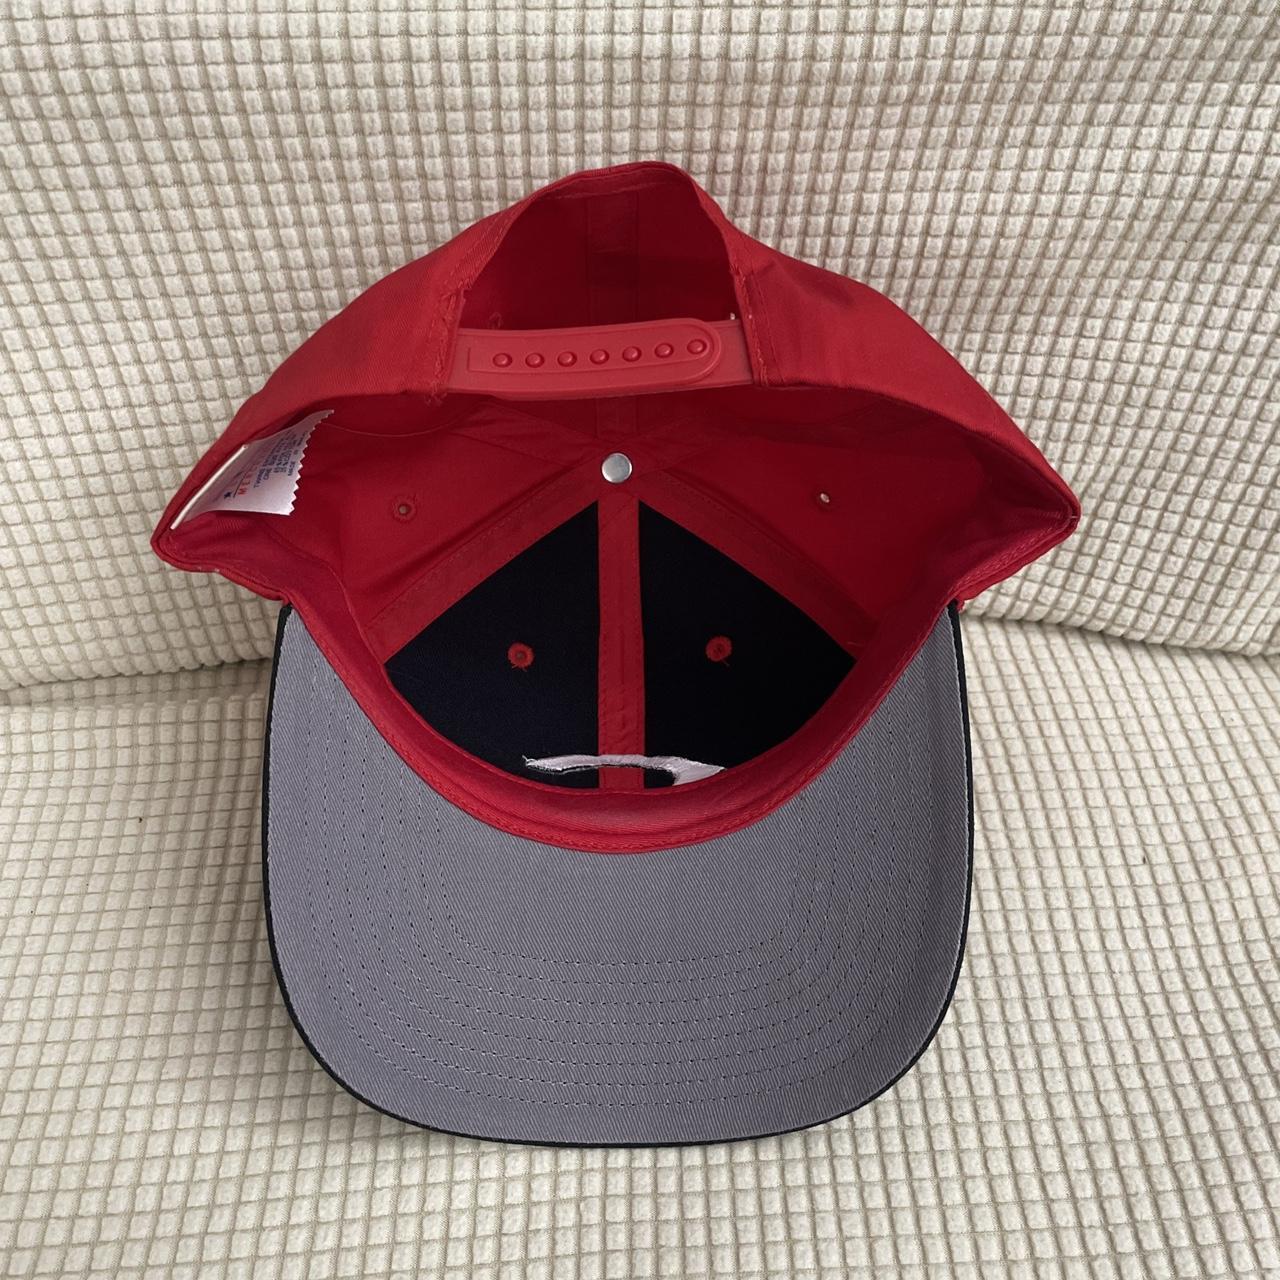 Vintage Cincinnati Reds Snapback Hat Twins Enterprise Inc MLB 